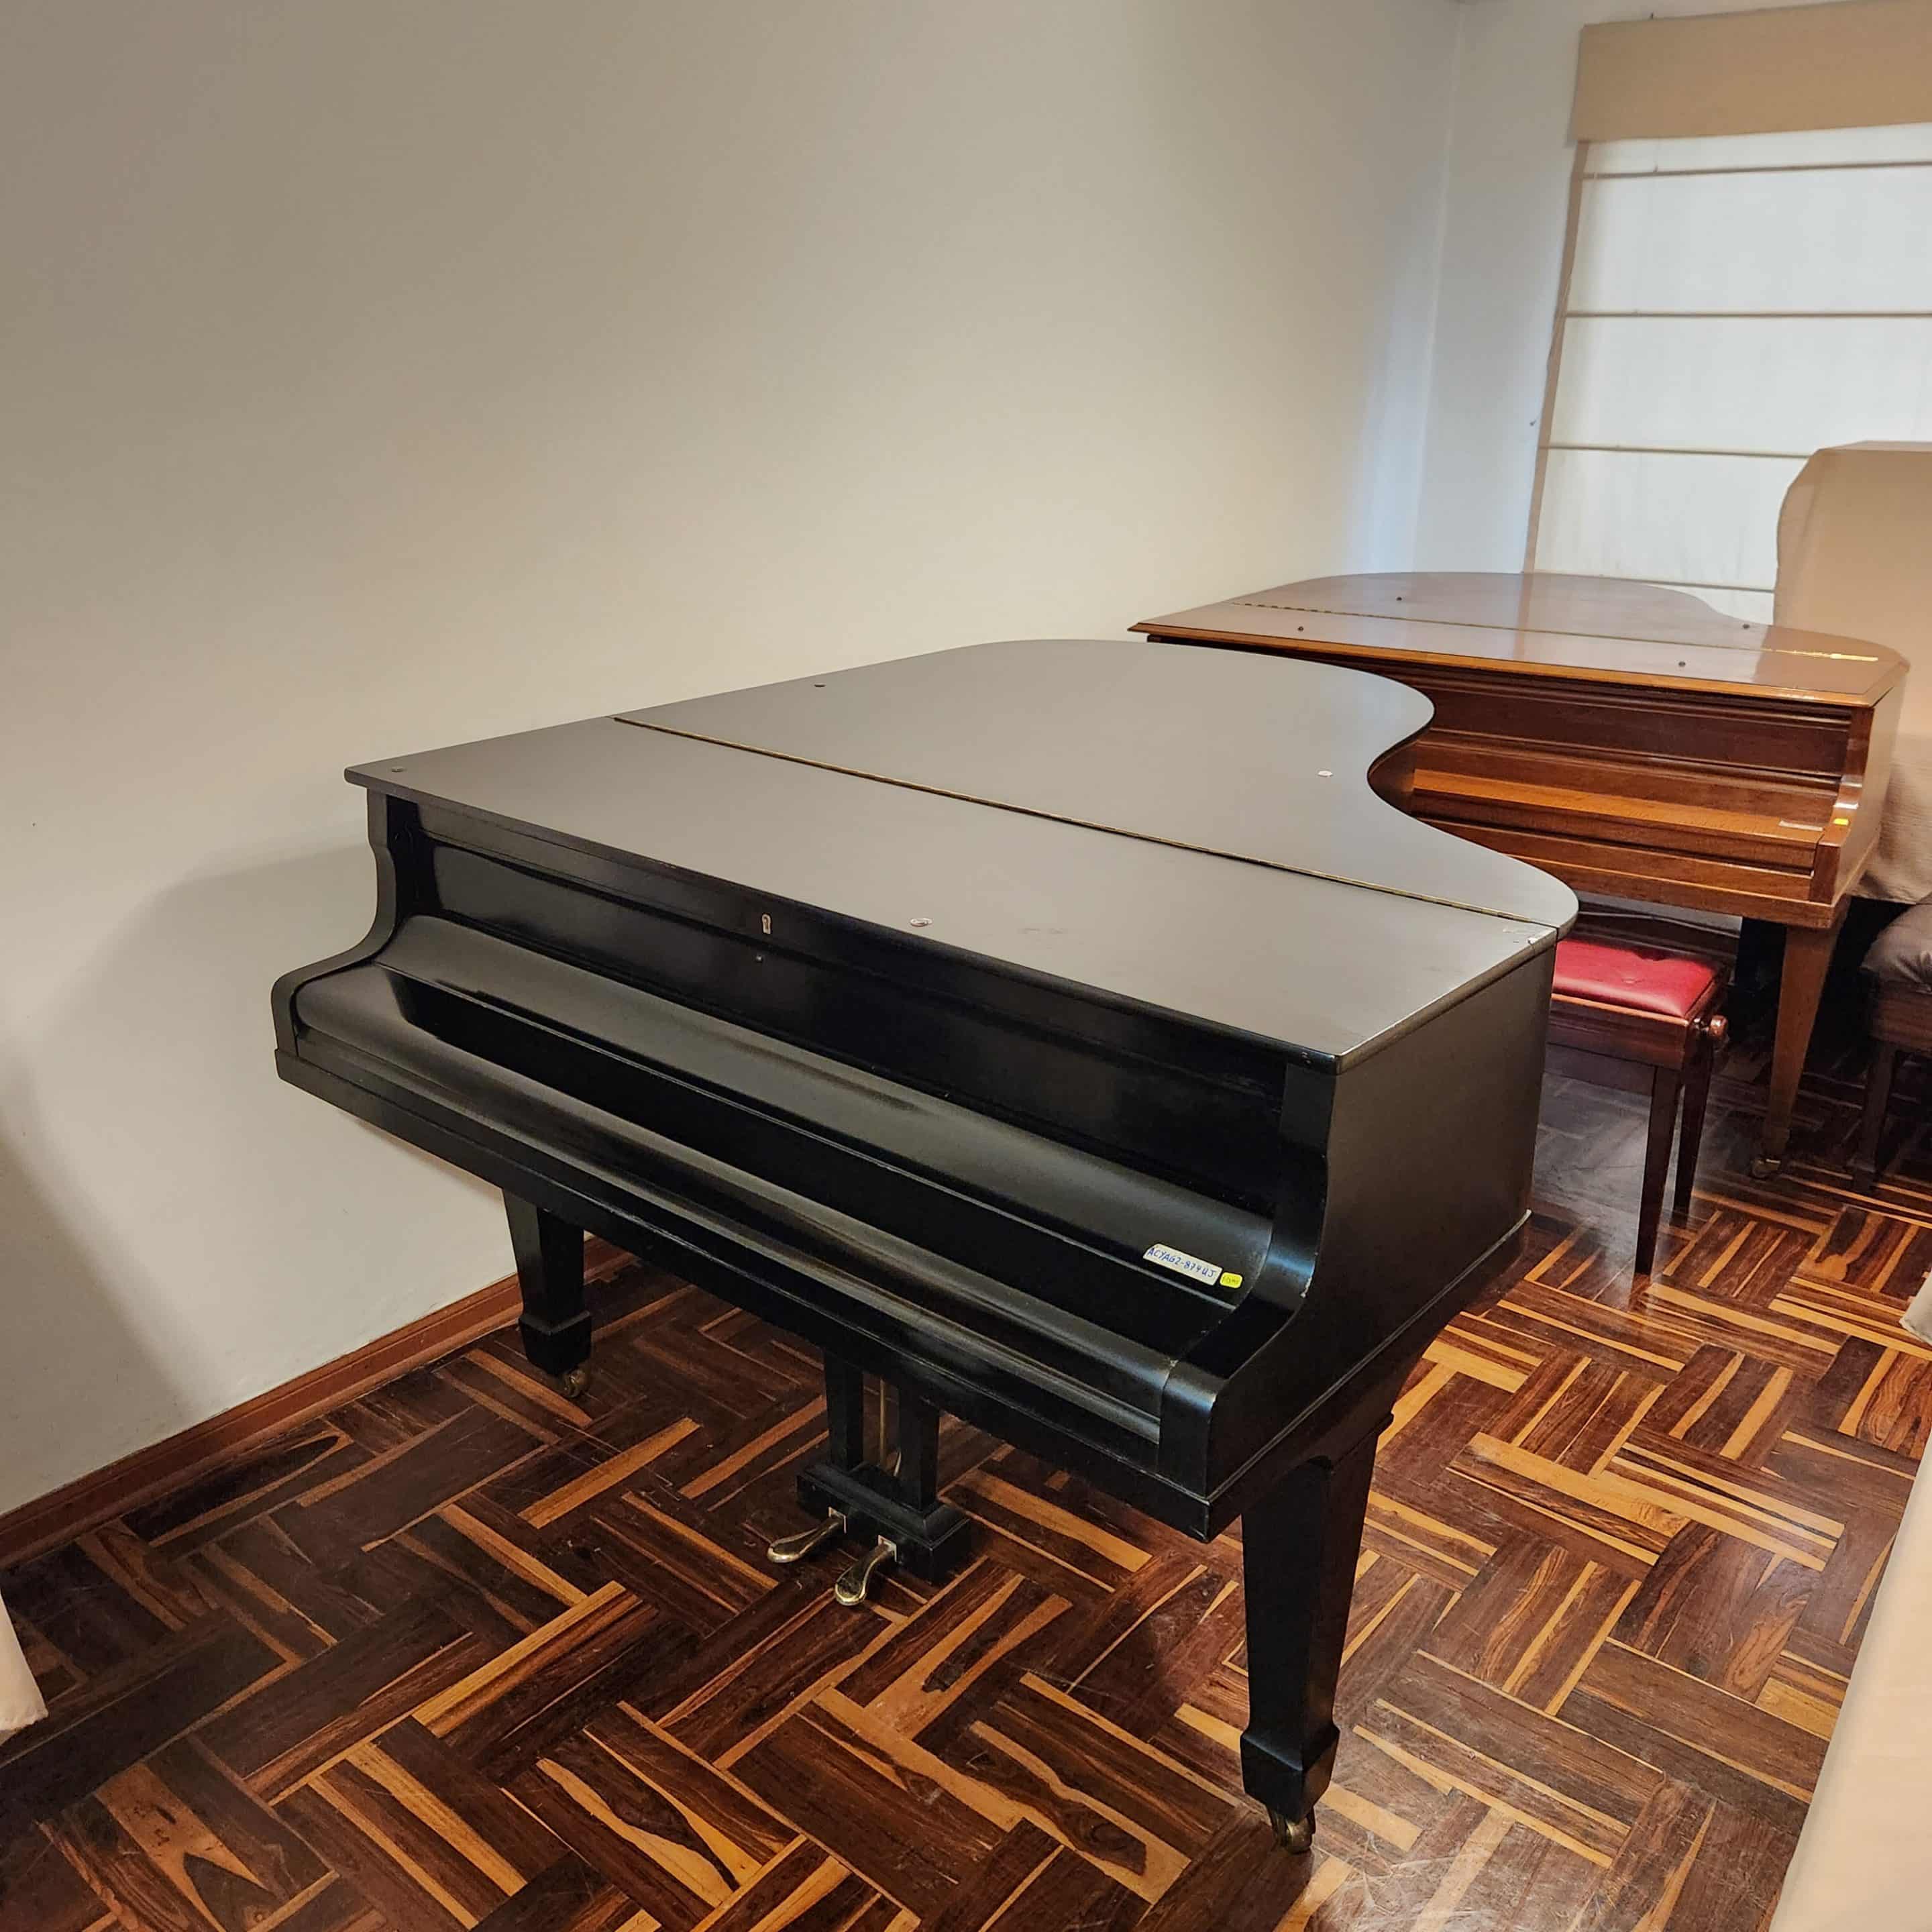 Piano Yamaha Japonés modelo G2 – Importadora de Pianos